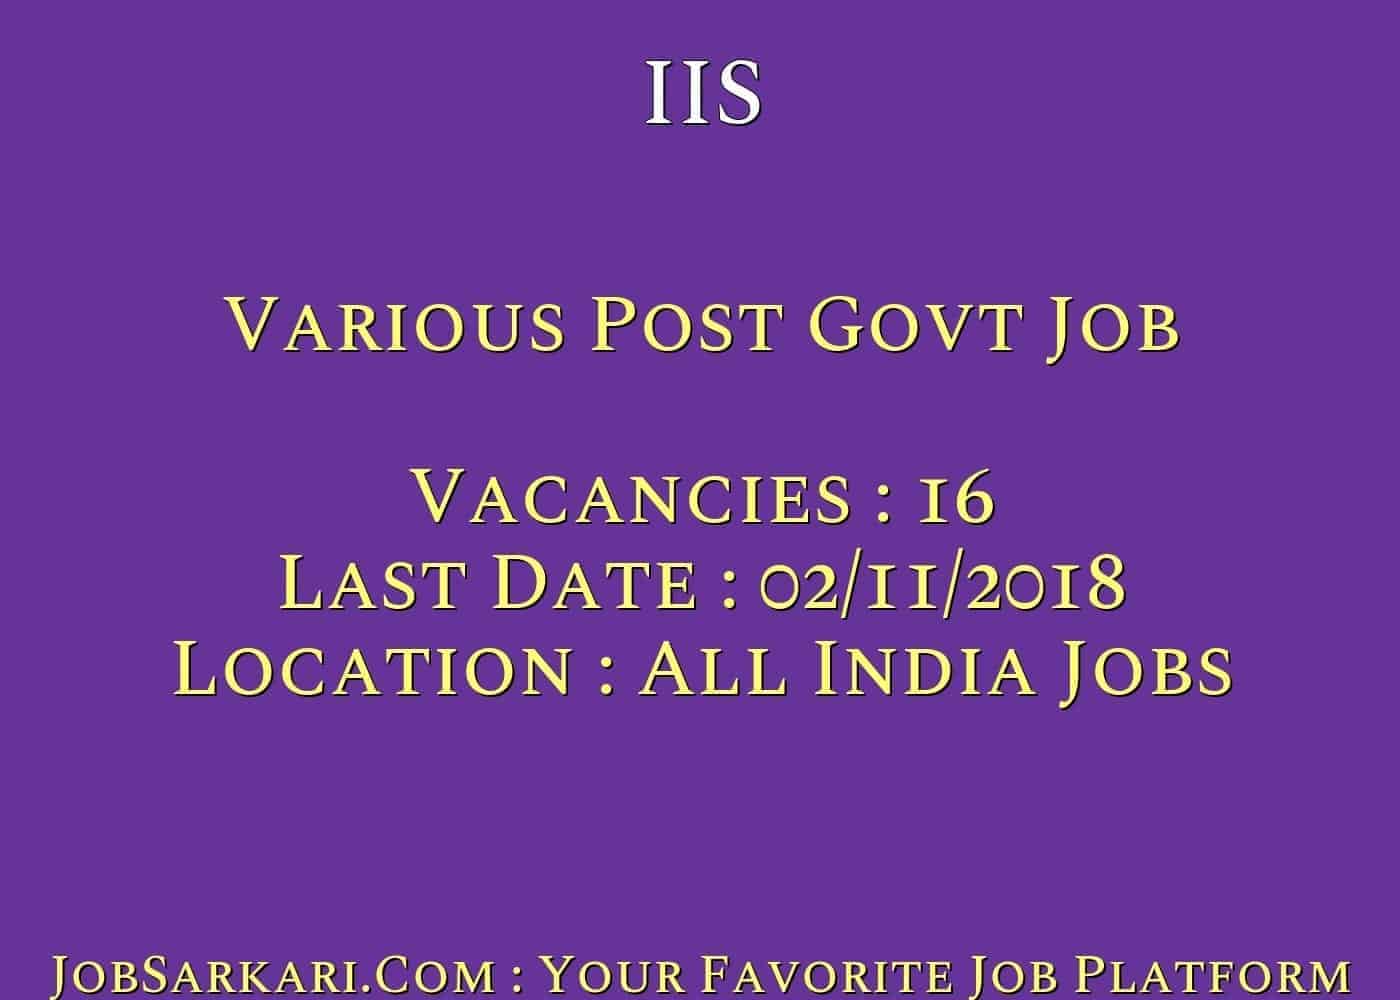 IIS Recruitment 2018 for Various Post Govt Job